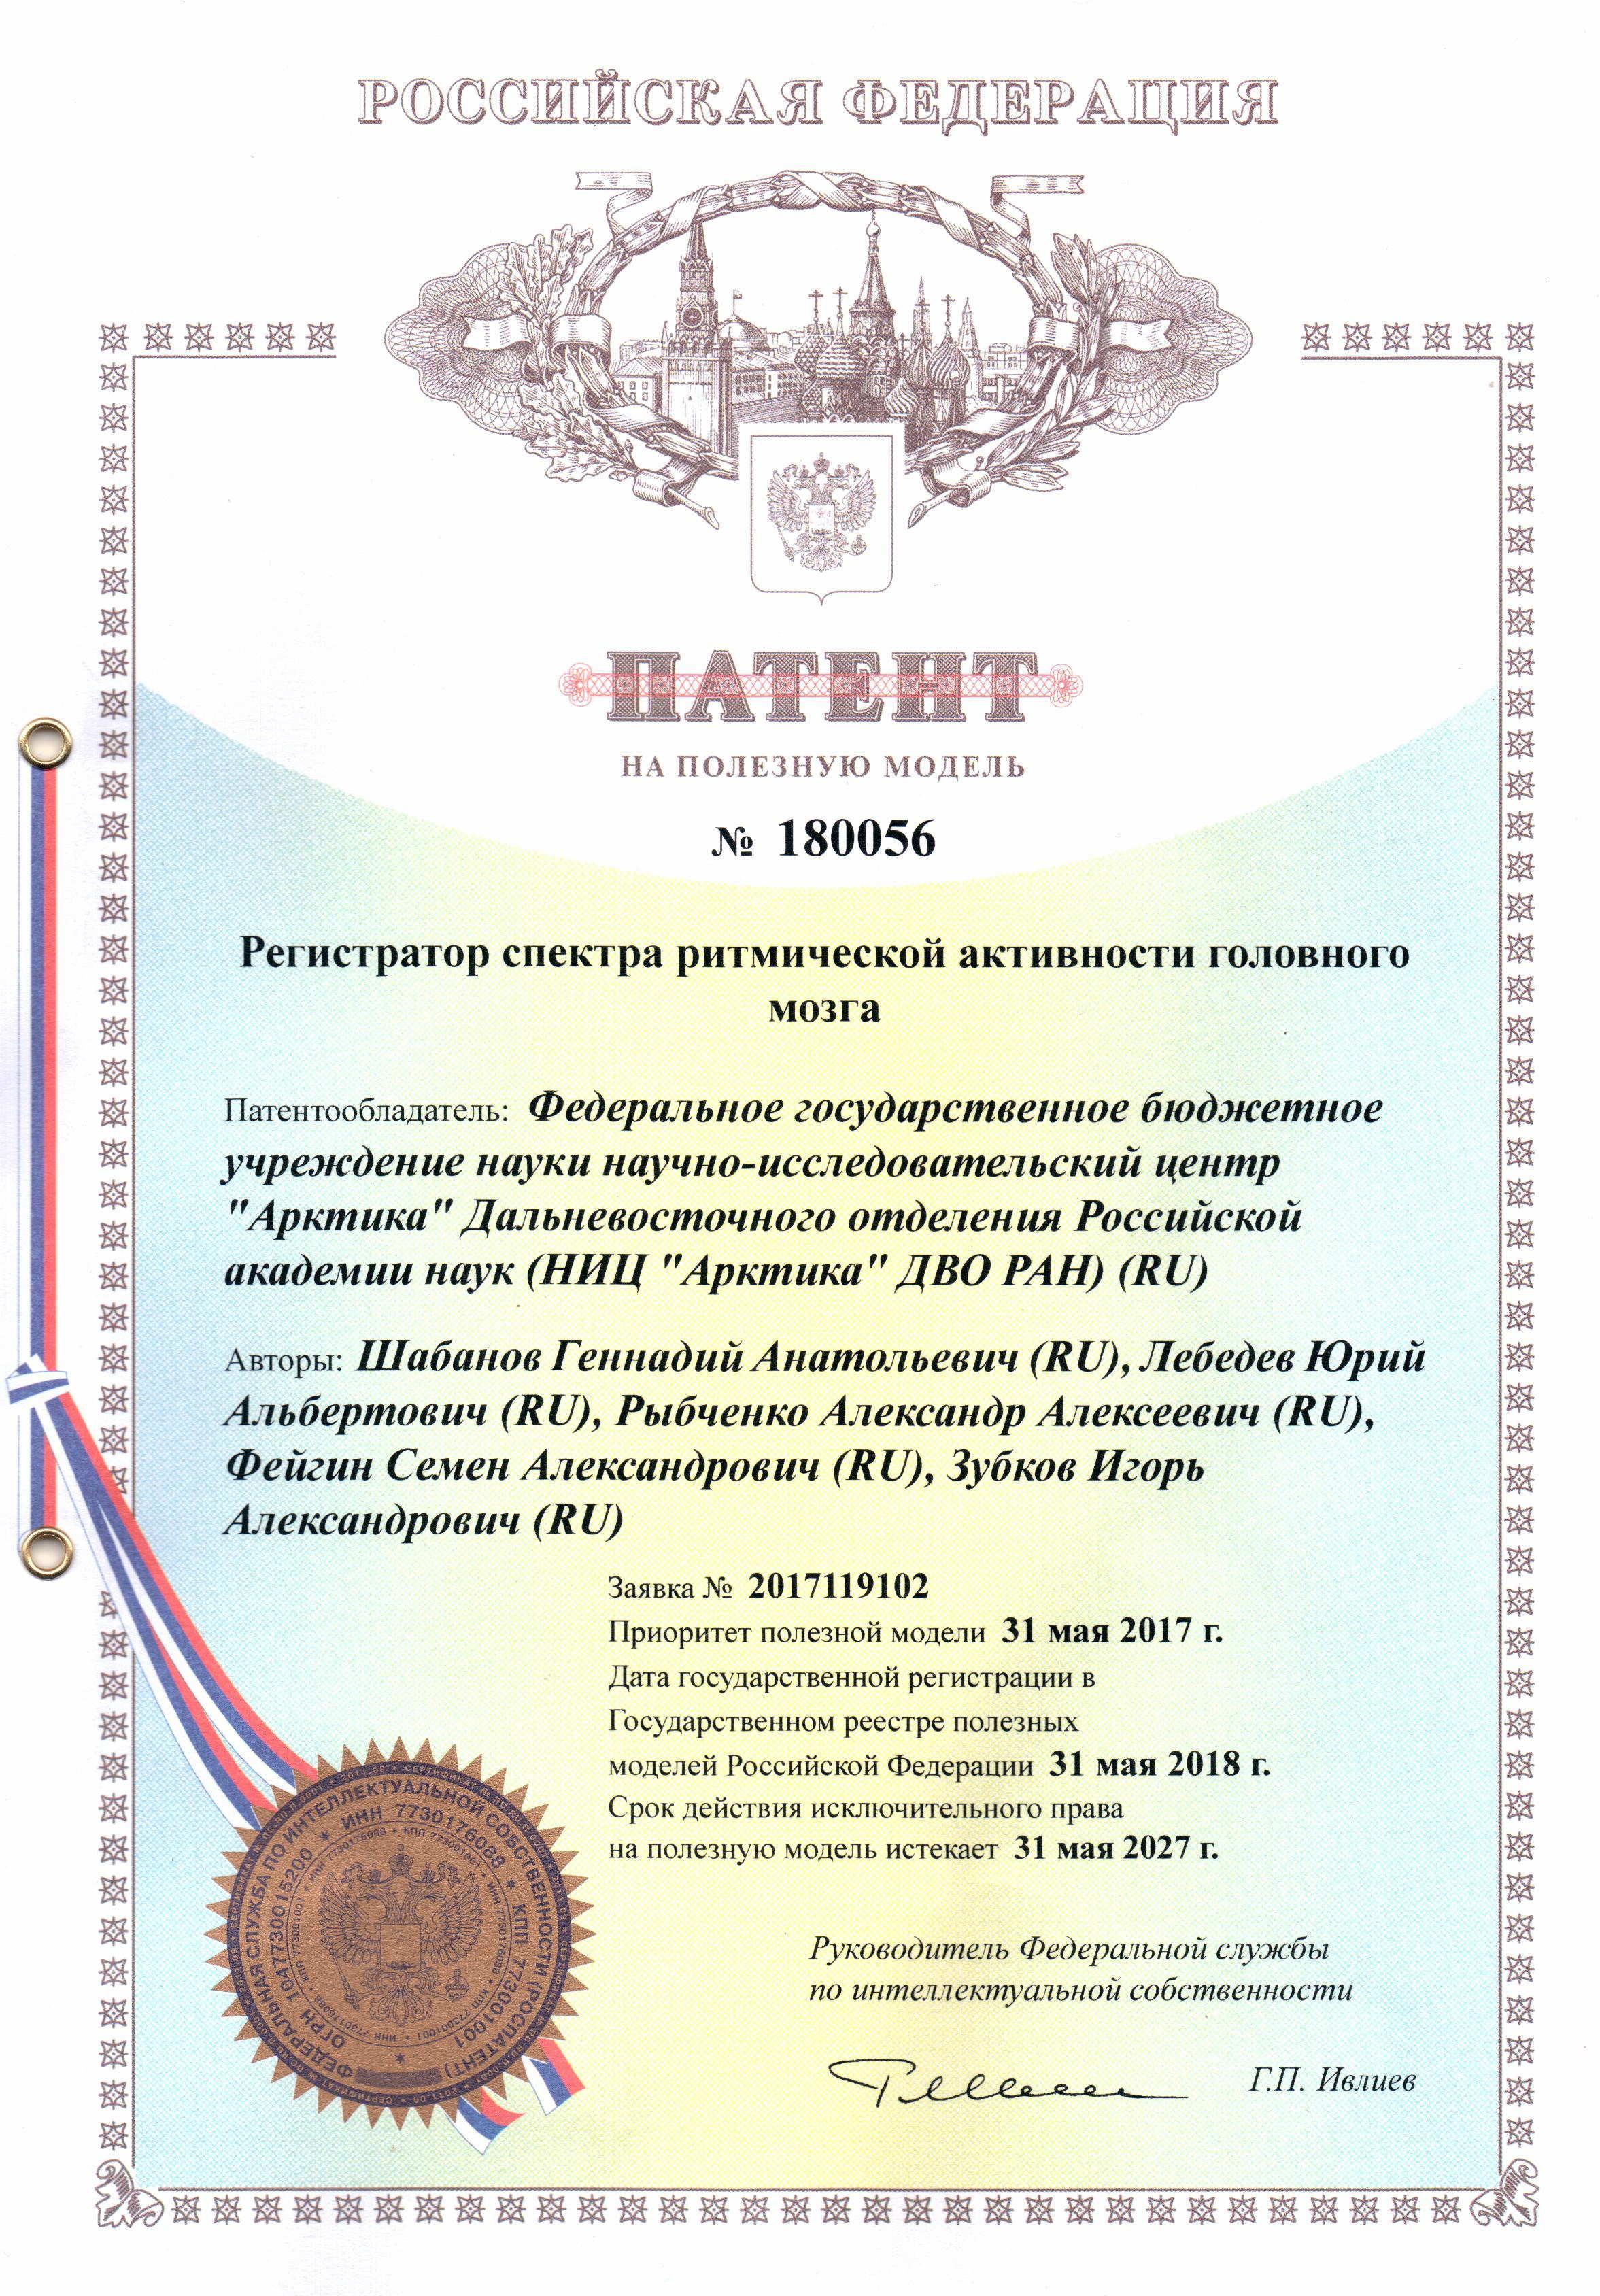 1_Патент2018_НИЦ_Арктика_ДВО_РАН.jpg